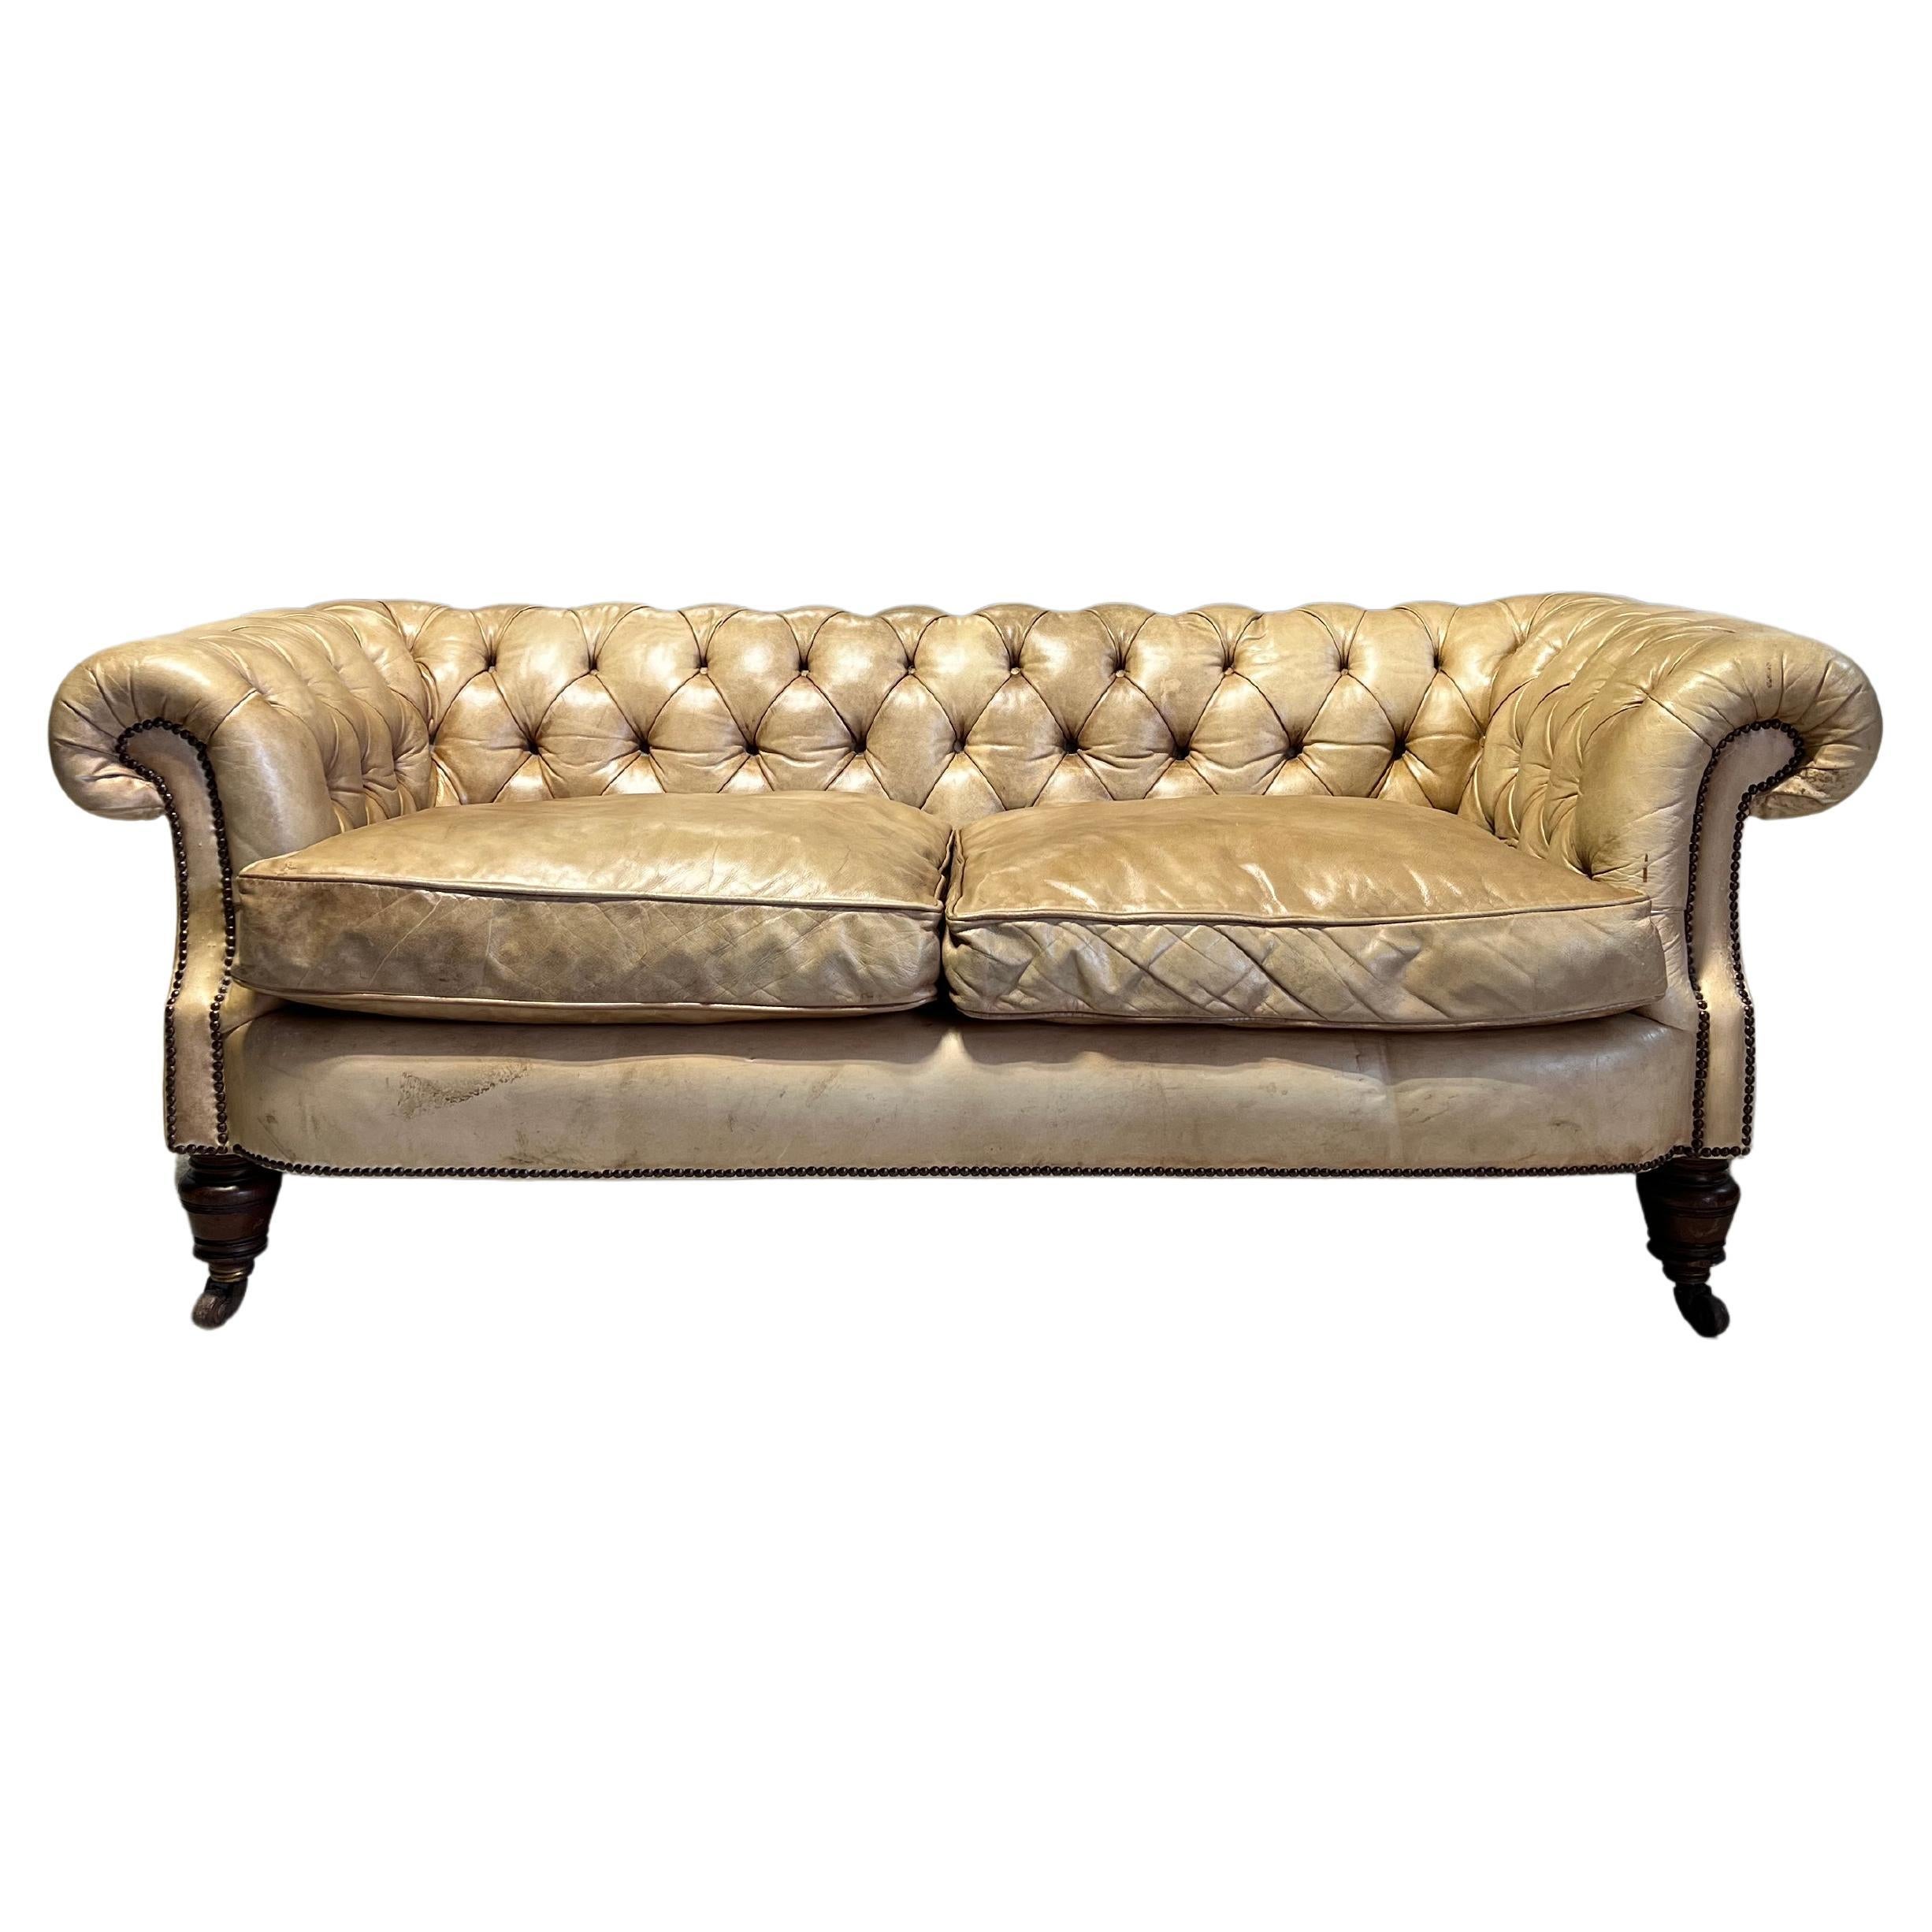 Antike Bow Fronted 19thC Chesterfield Sofa in Hand gefärbt Pergament Leder